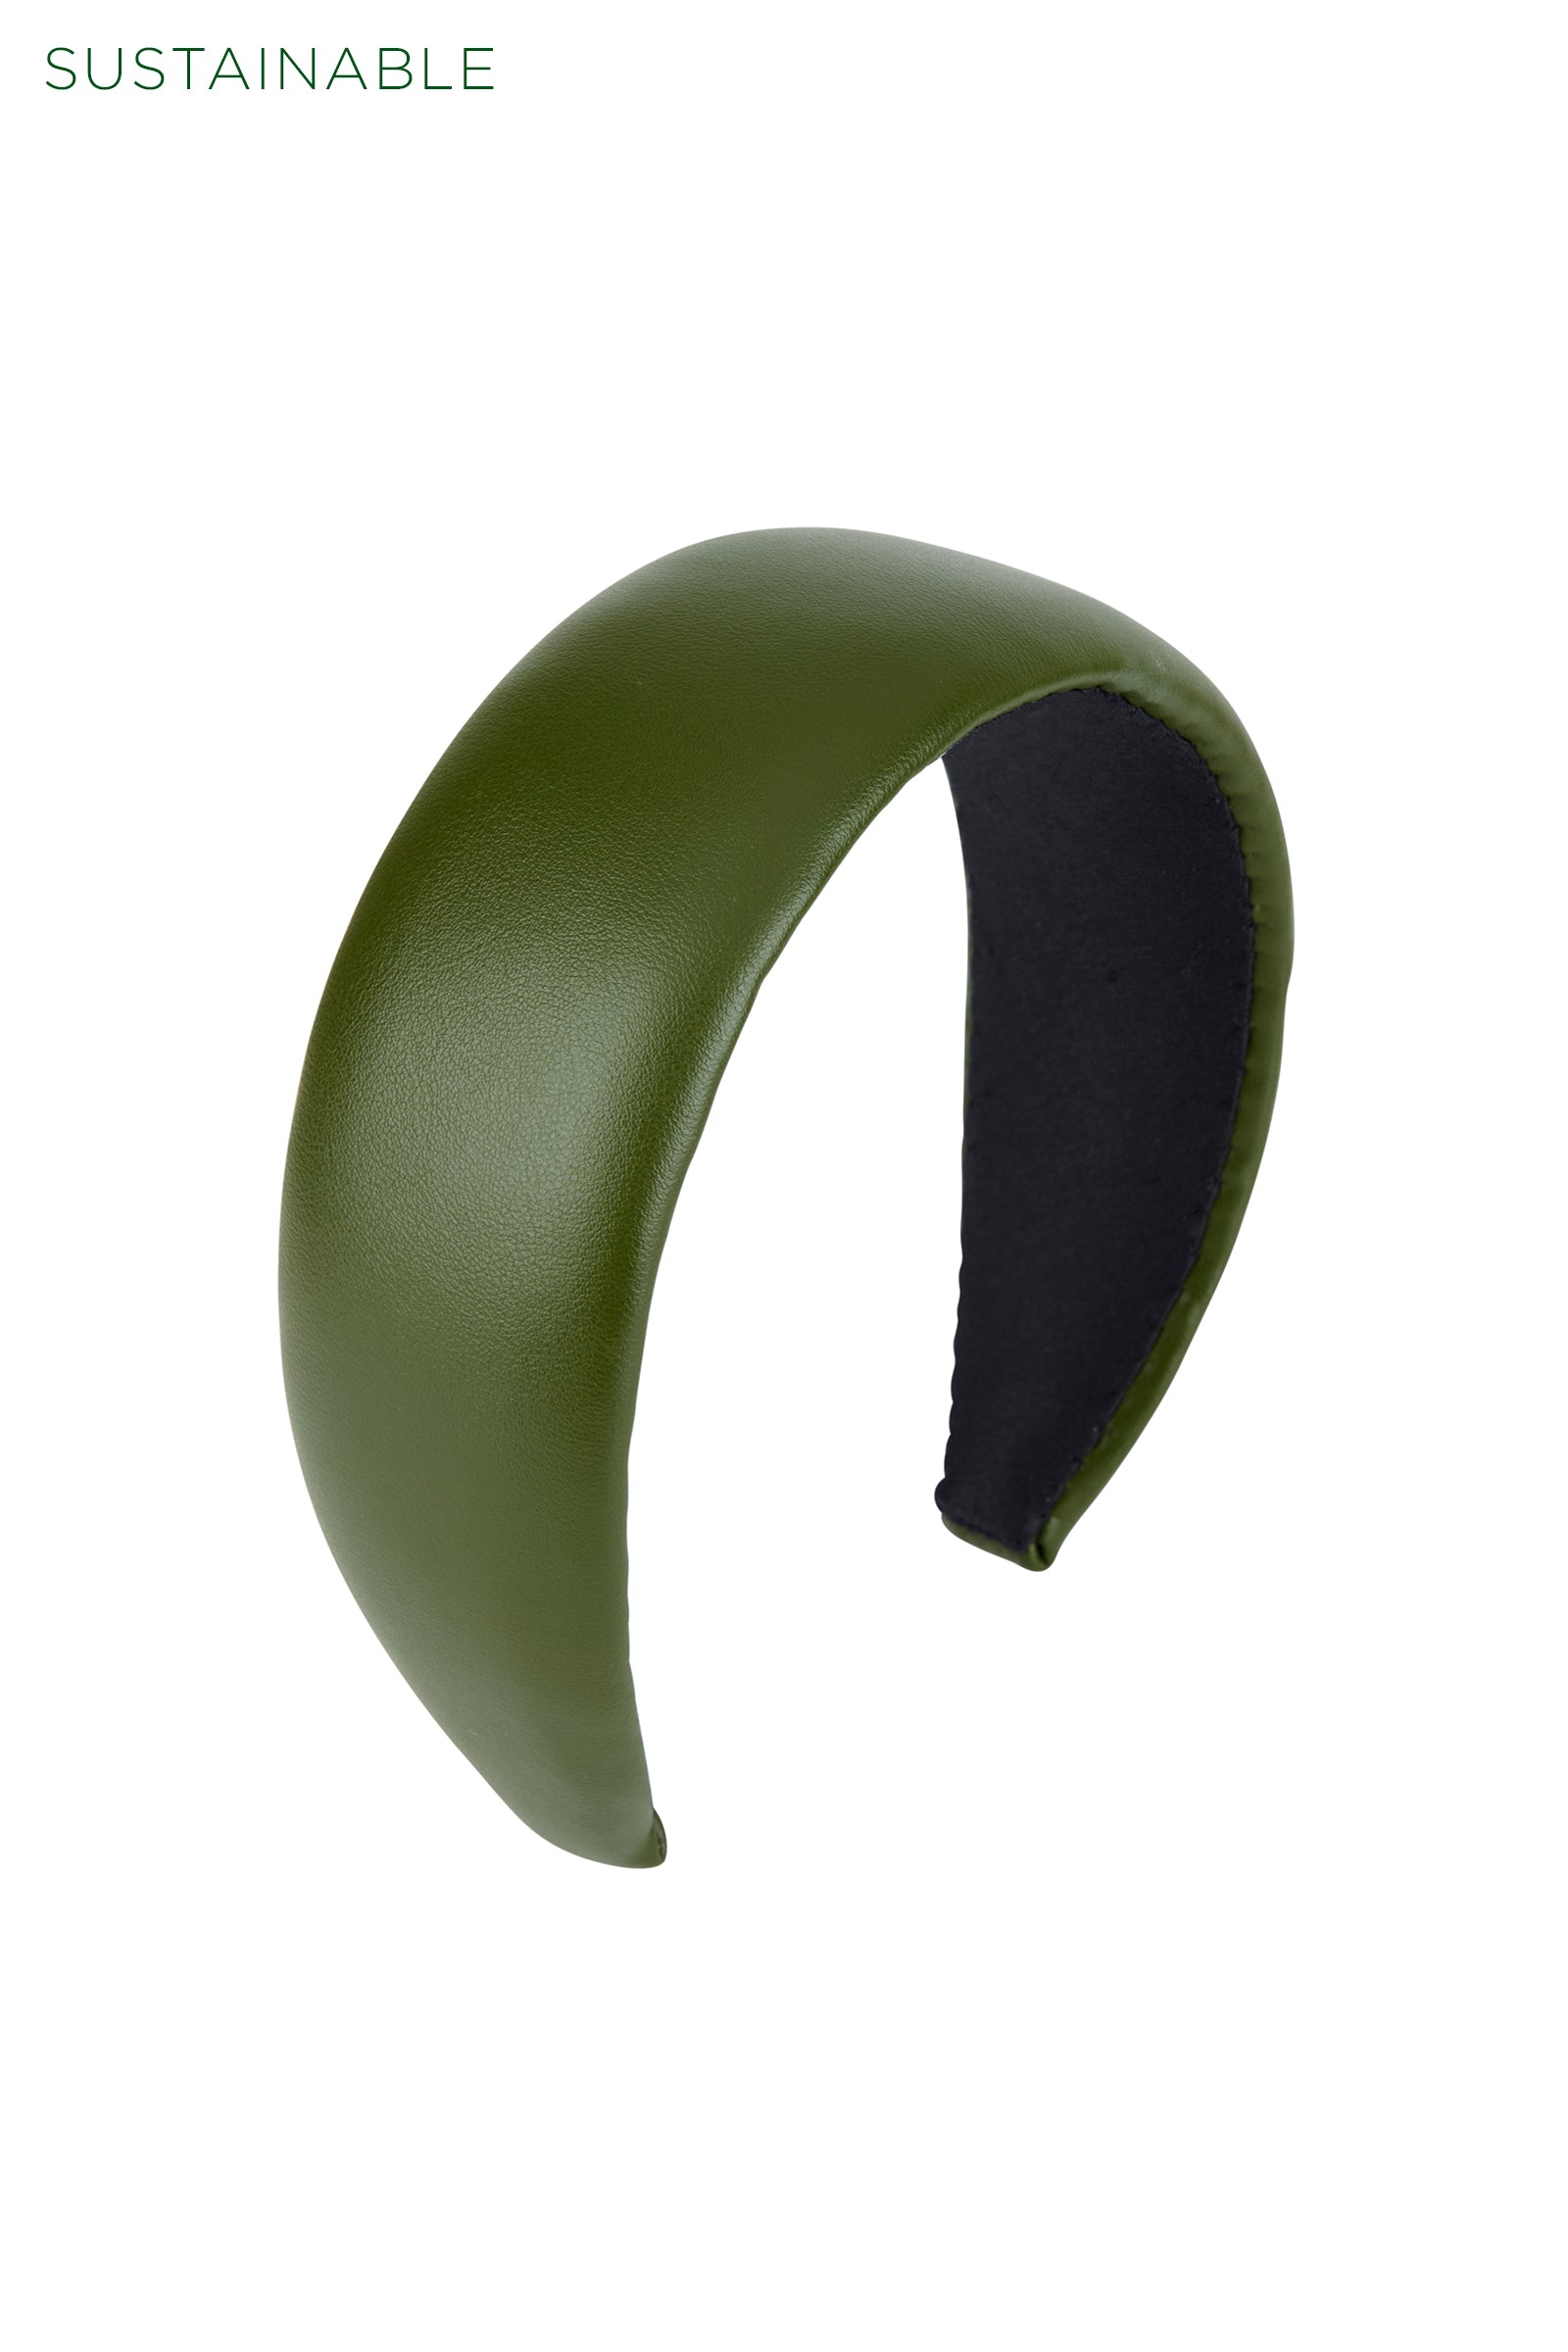 Cactus Leather Sustainable Headband Green